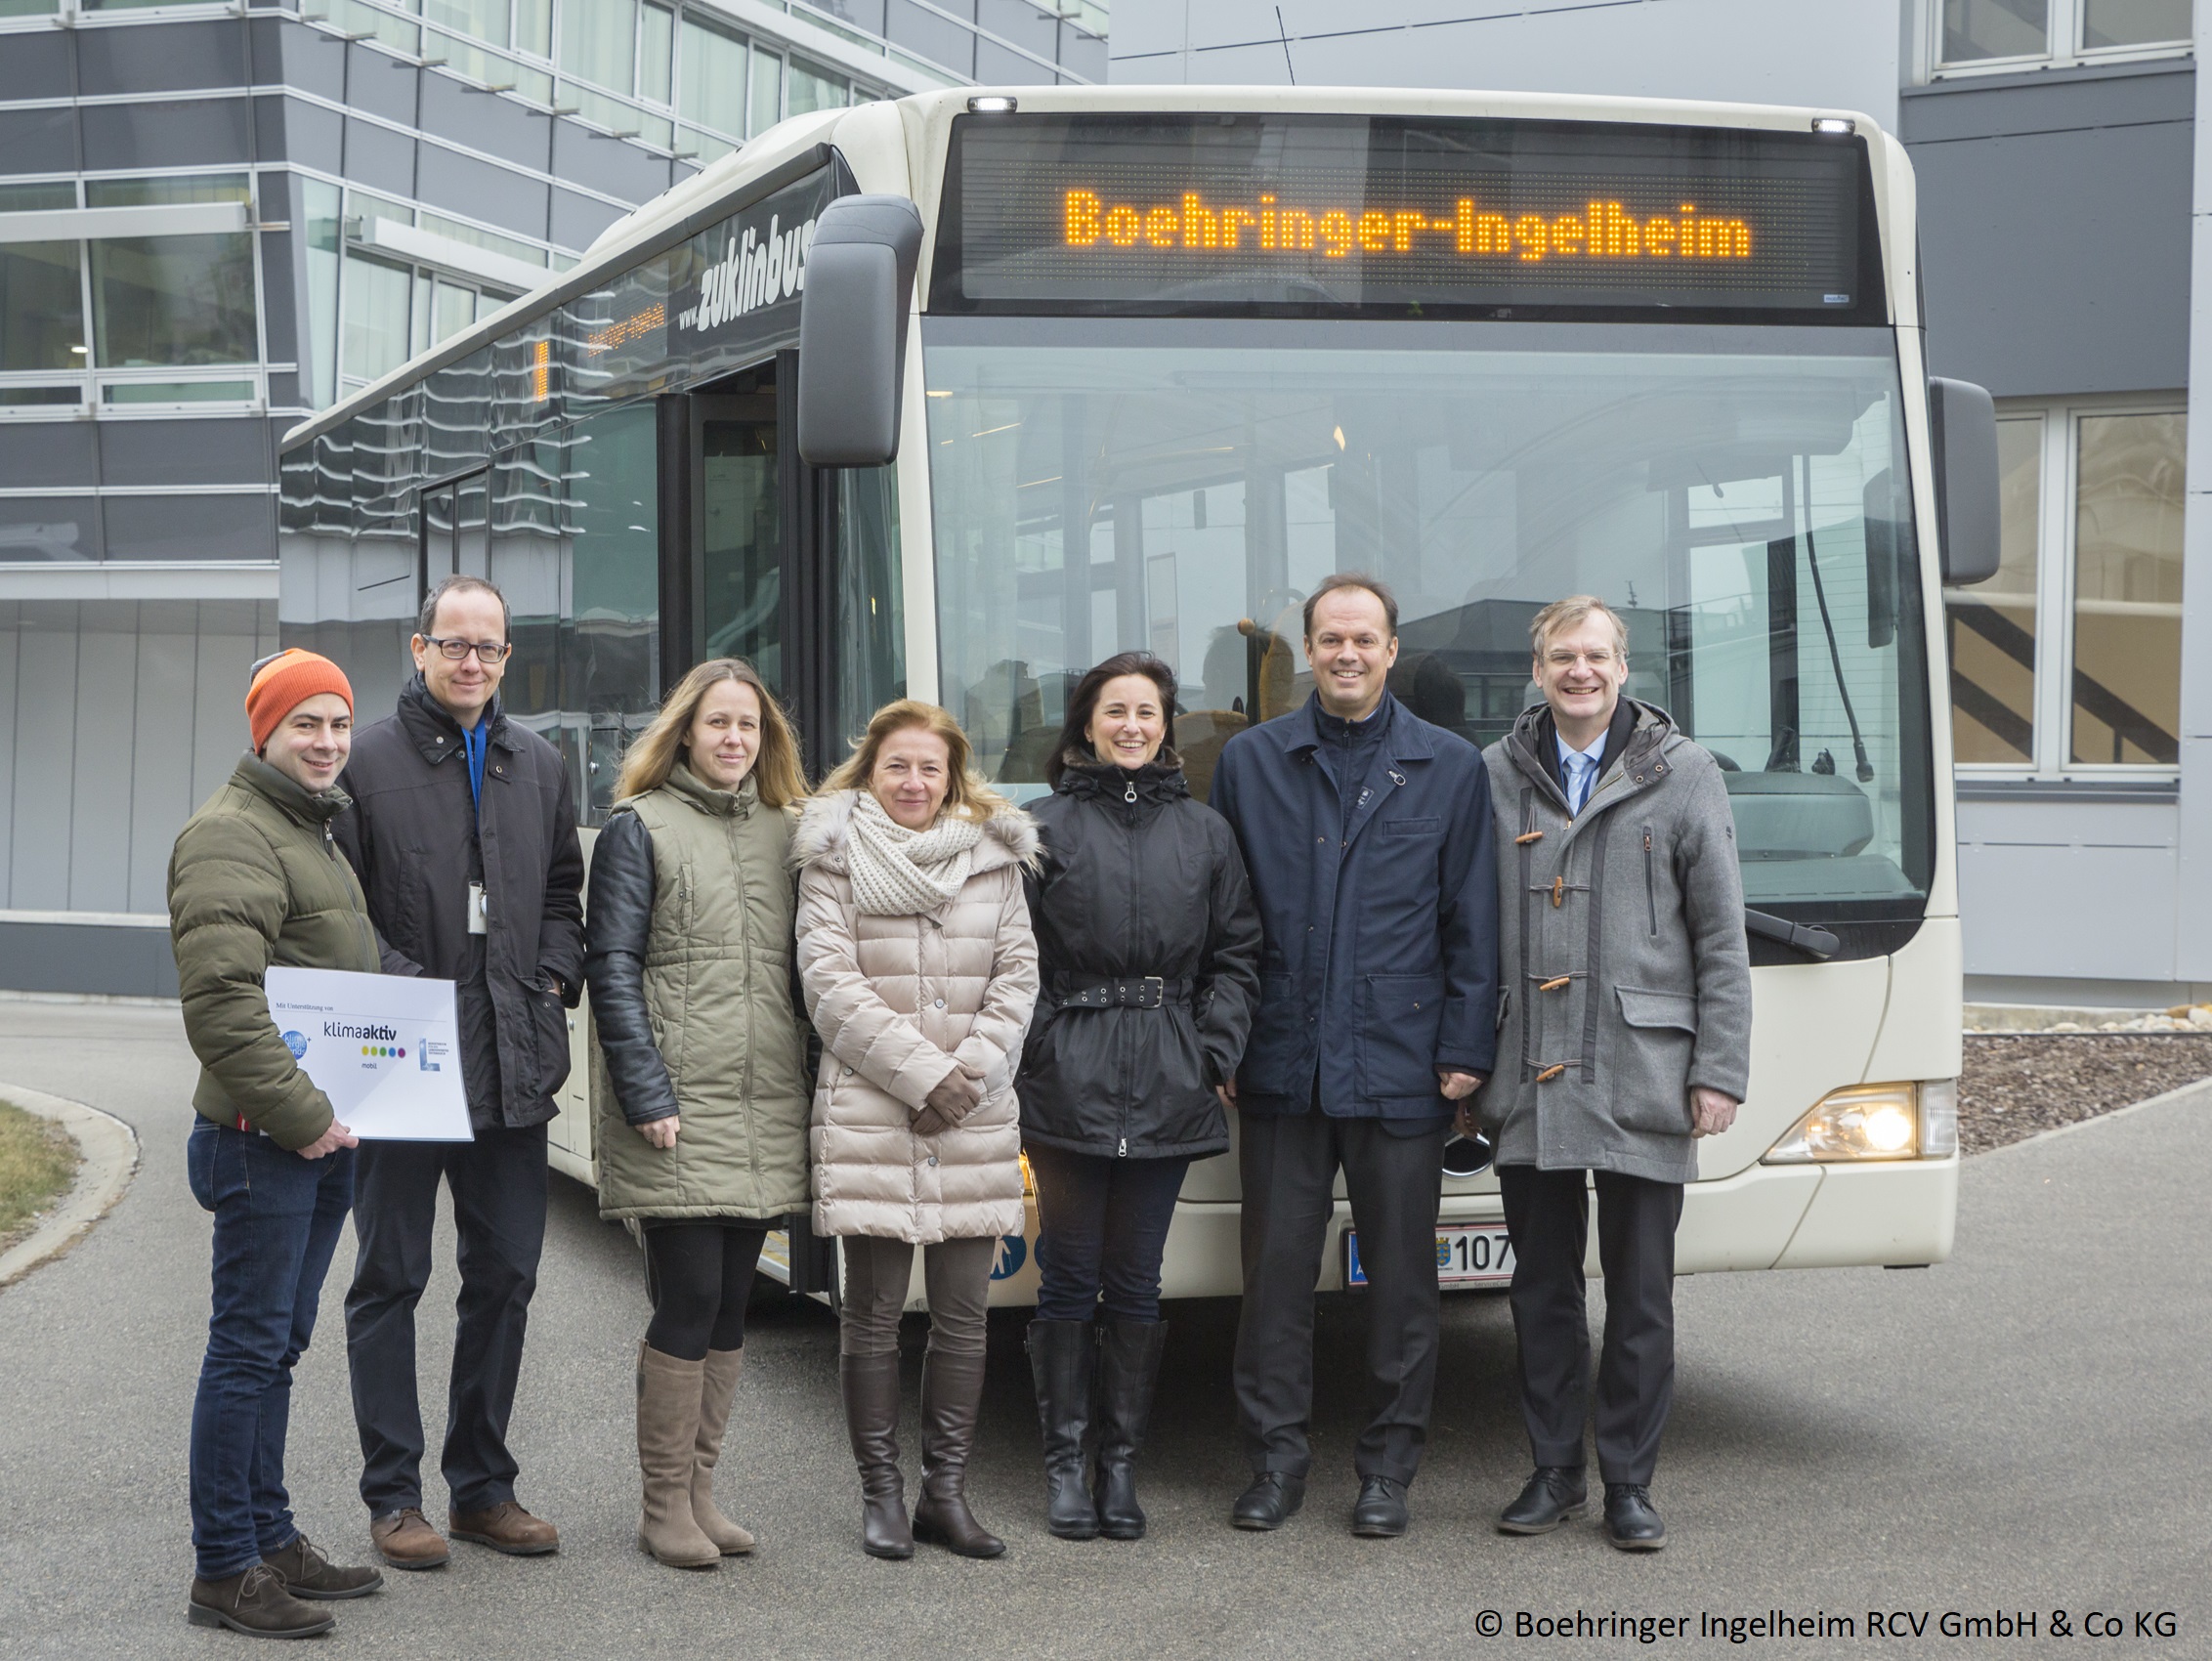 Boehringer Betriebsbus